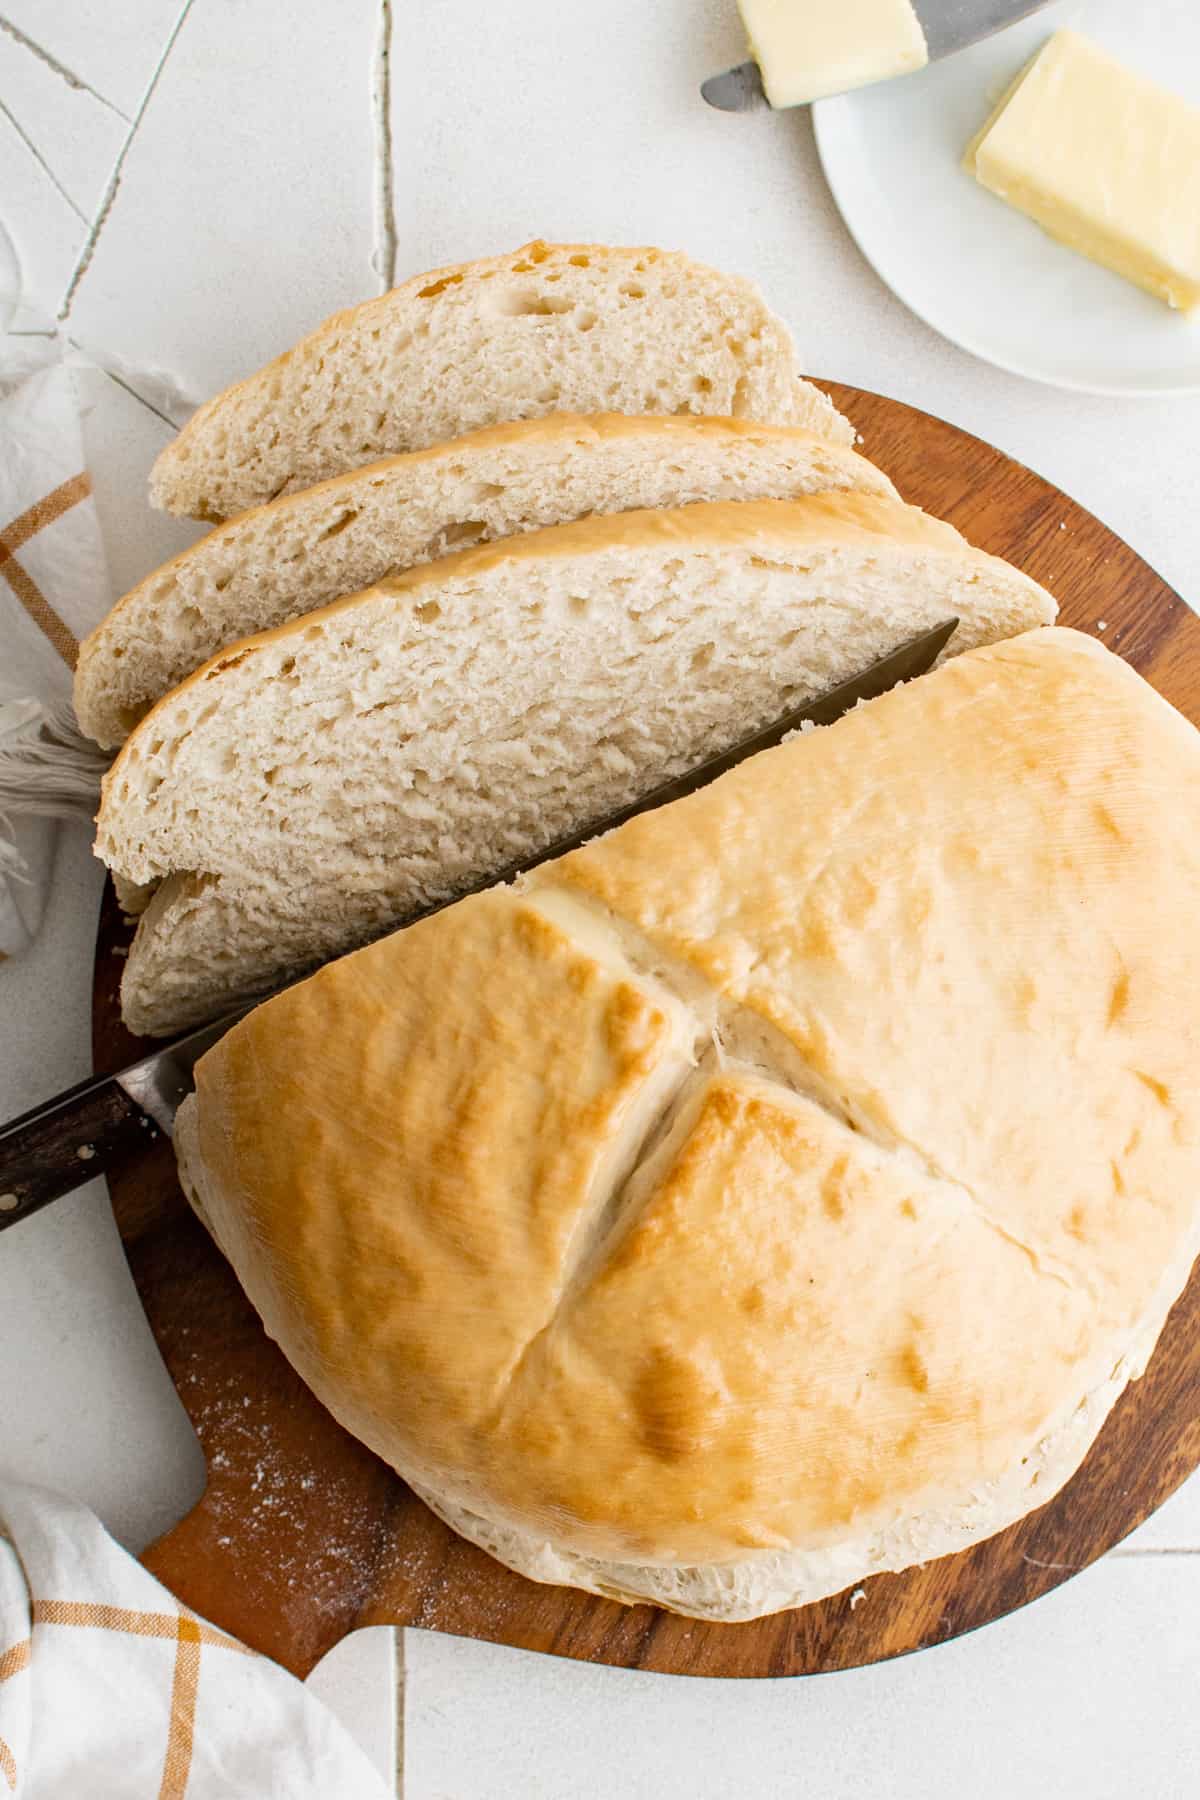 https://www.thecookierookie.com/wp-content/uploads/2022/09/Skillet-Bread-2.jpg